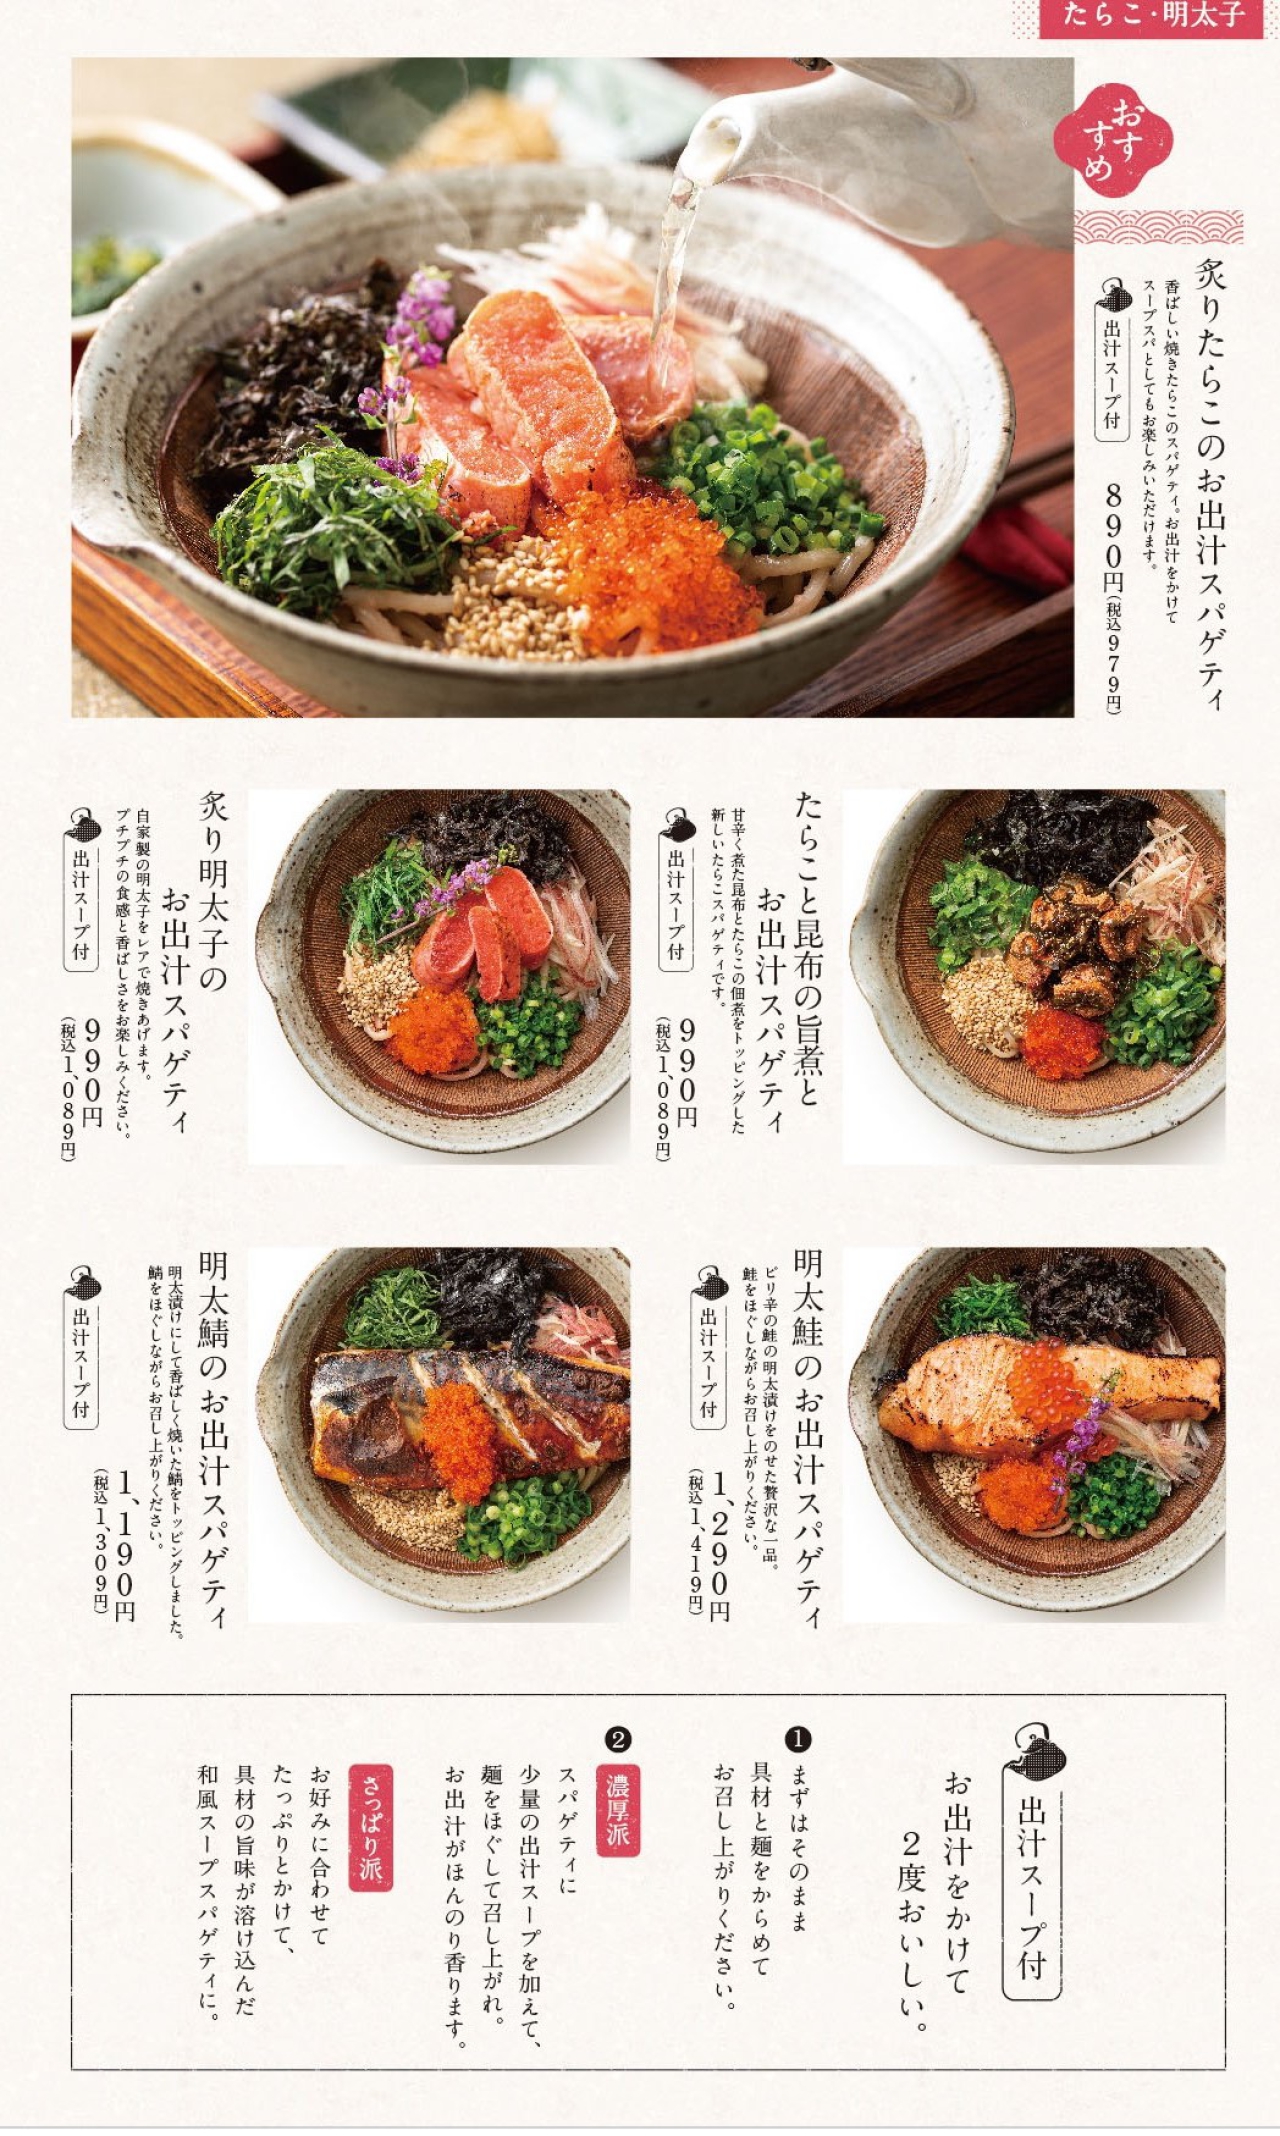 Minamiikebukuro store menu table ①